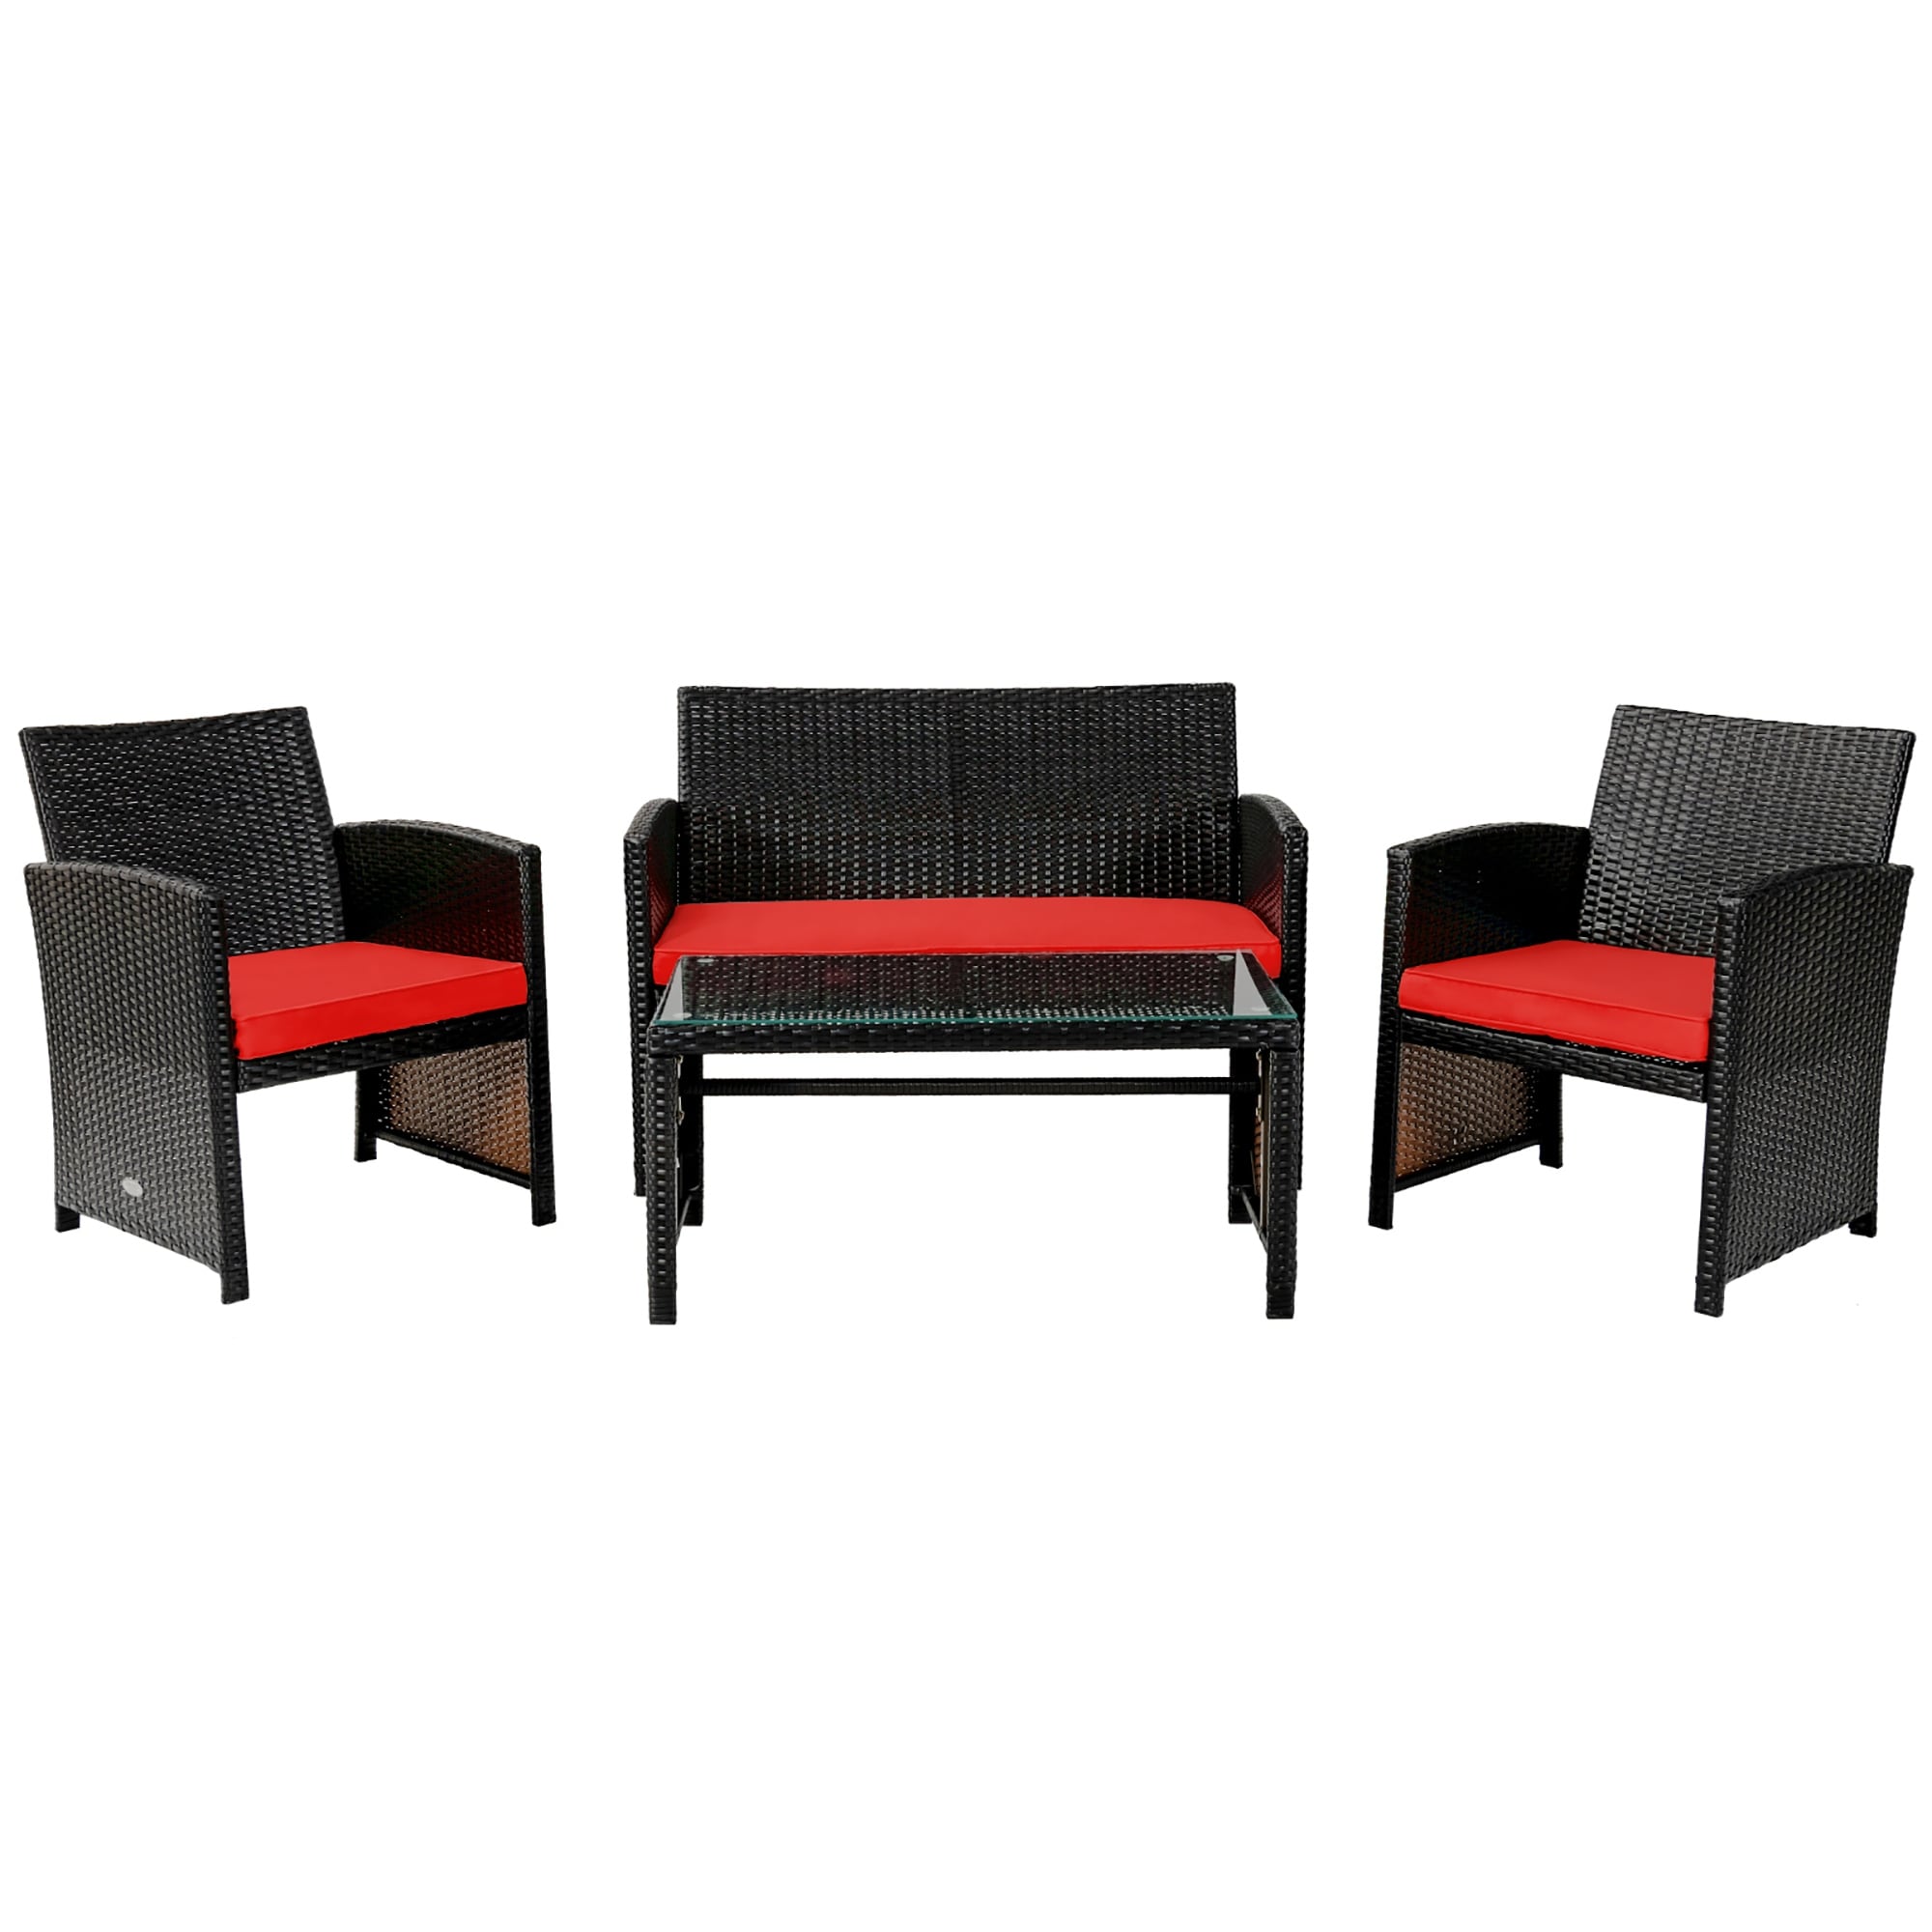 4 Pieces Rattan Furniture Set Outdoor Conversation Set